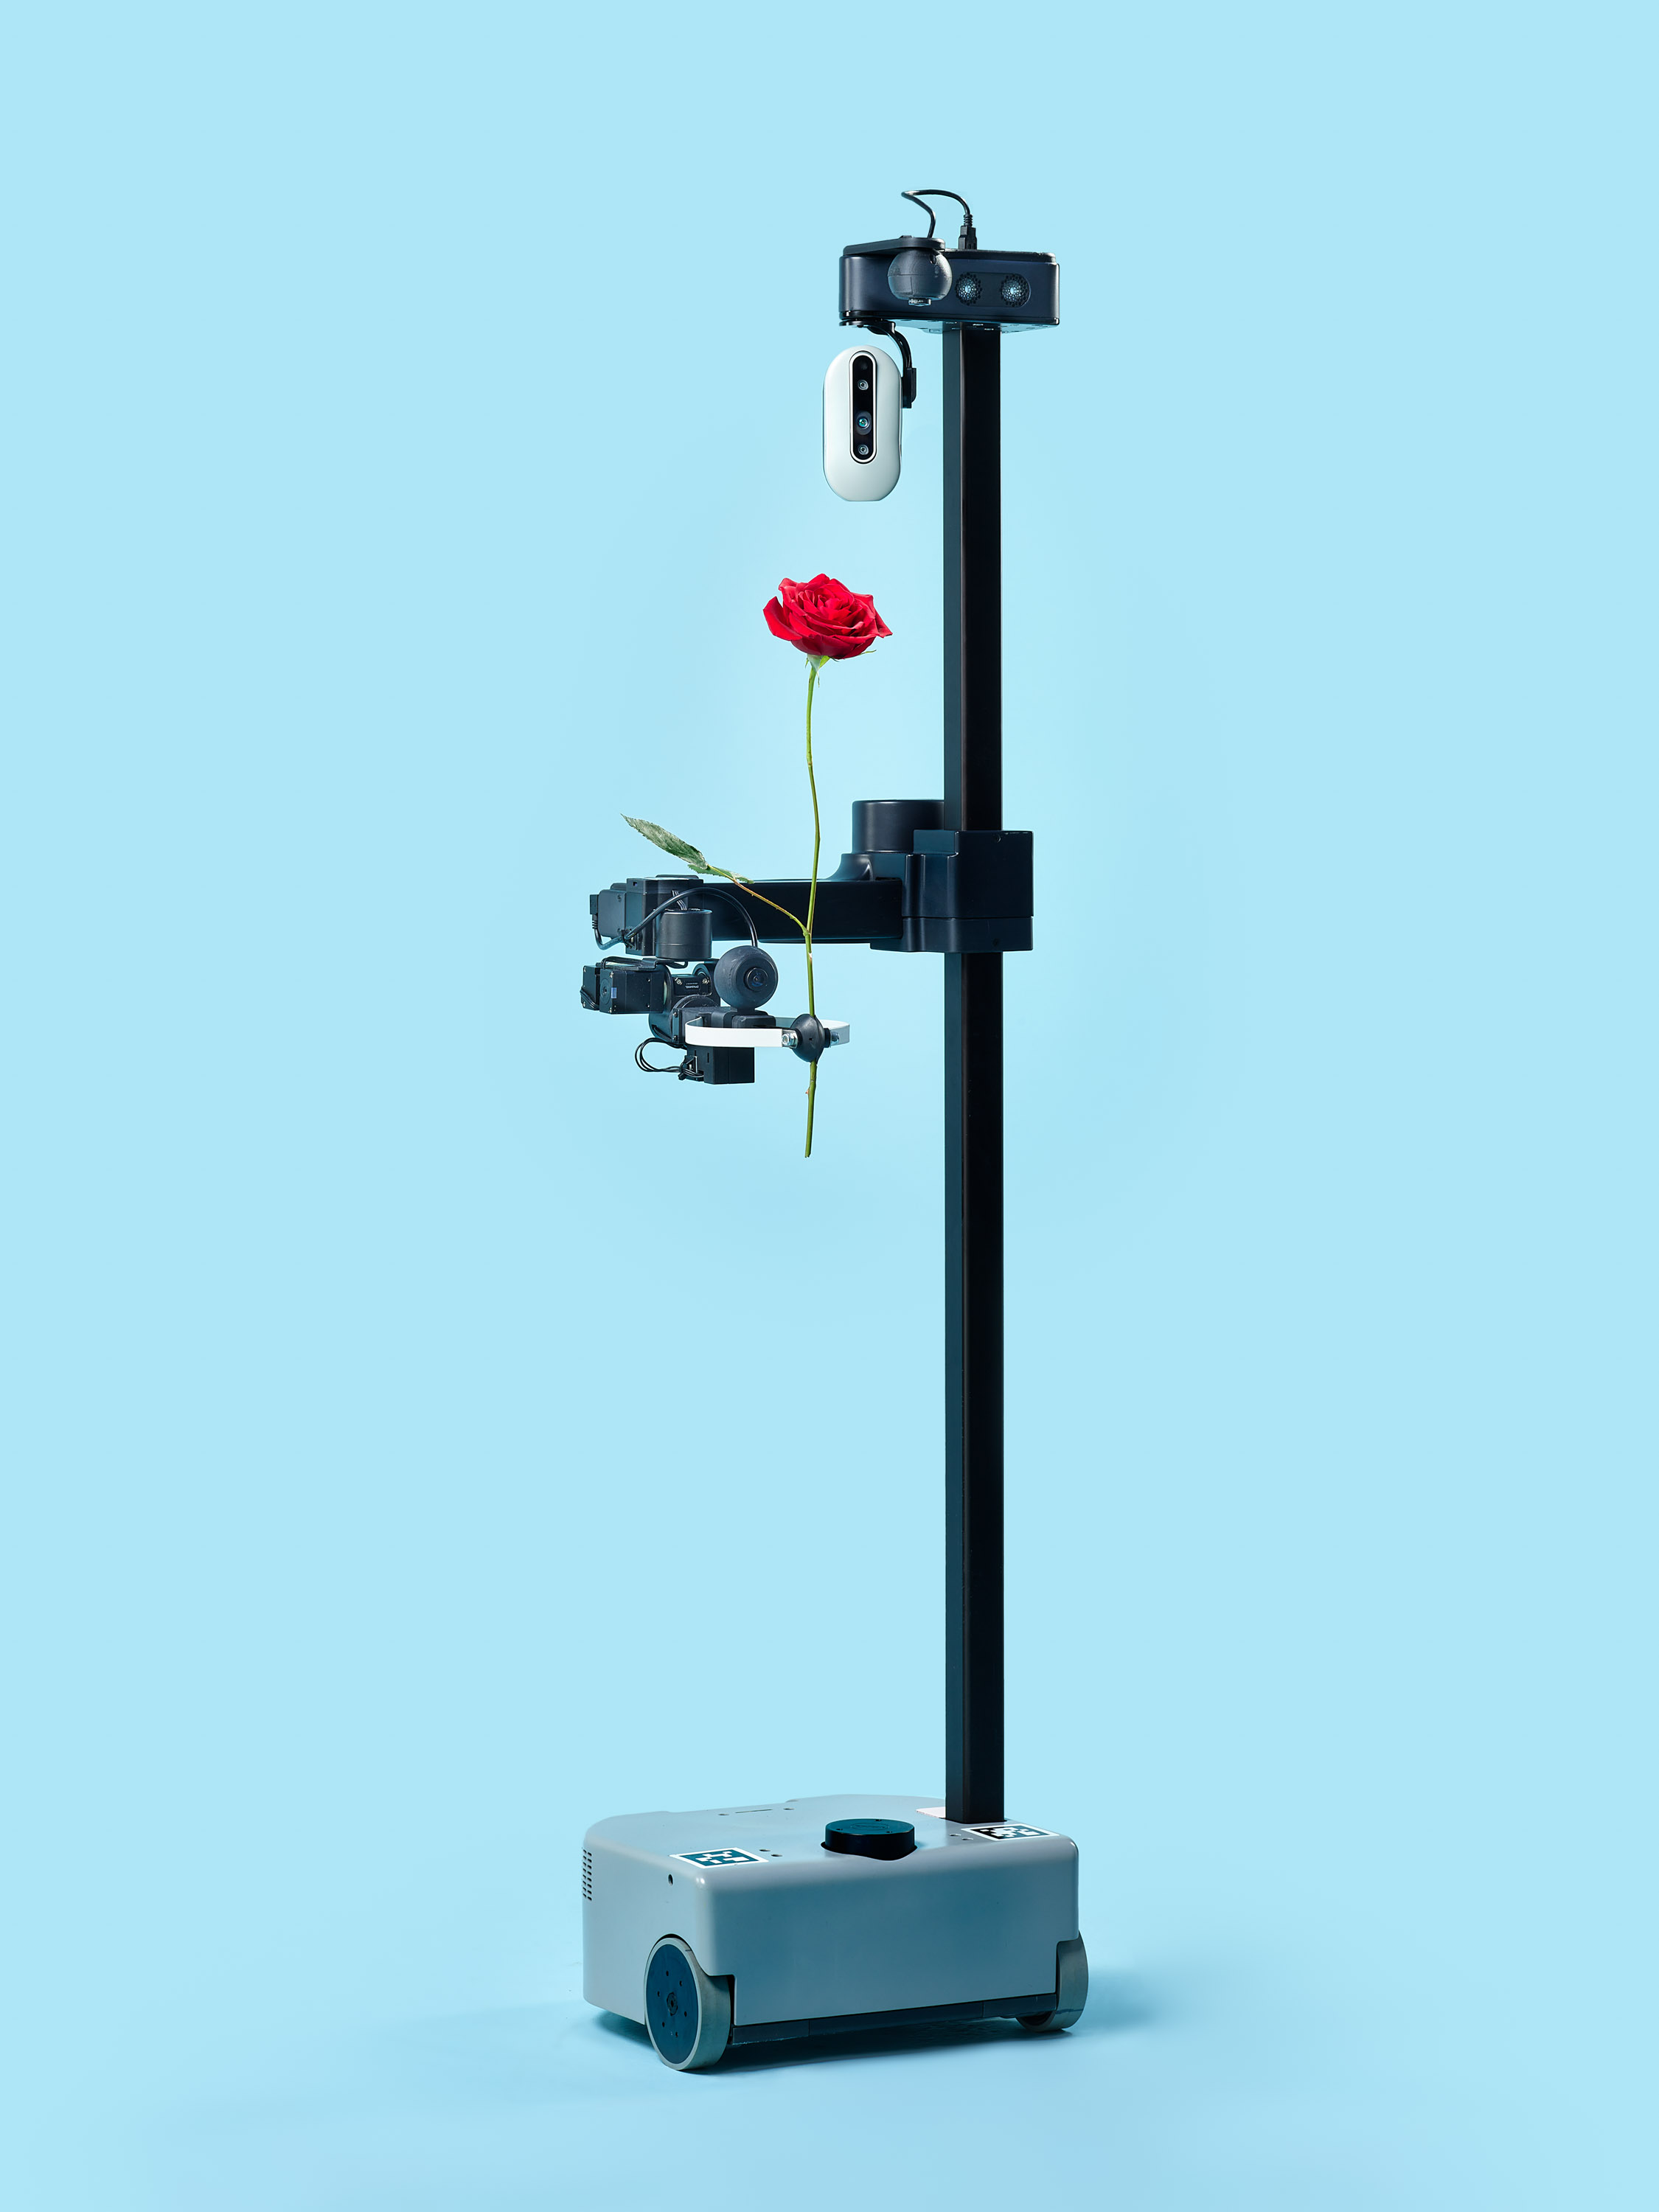 Stretch Robot Presents a Rose in its gripper